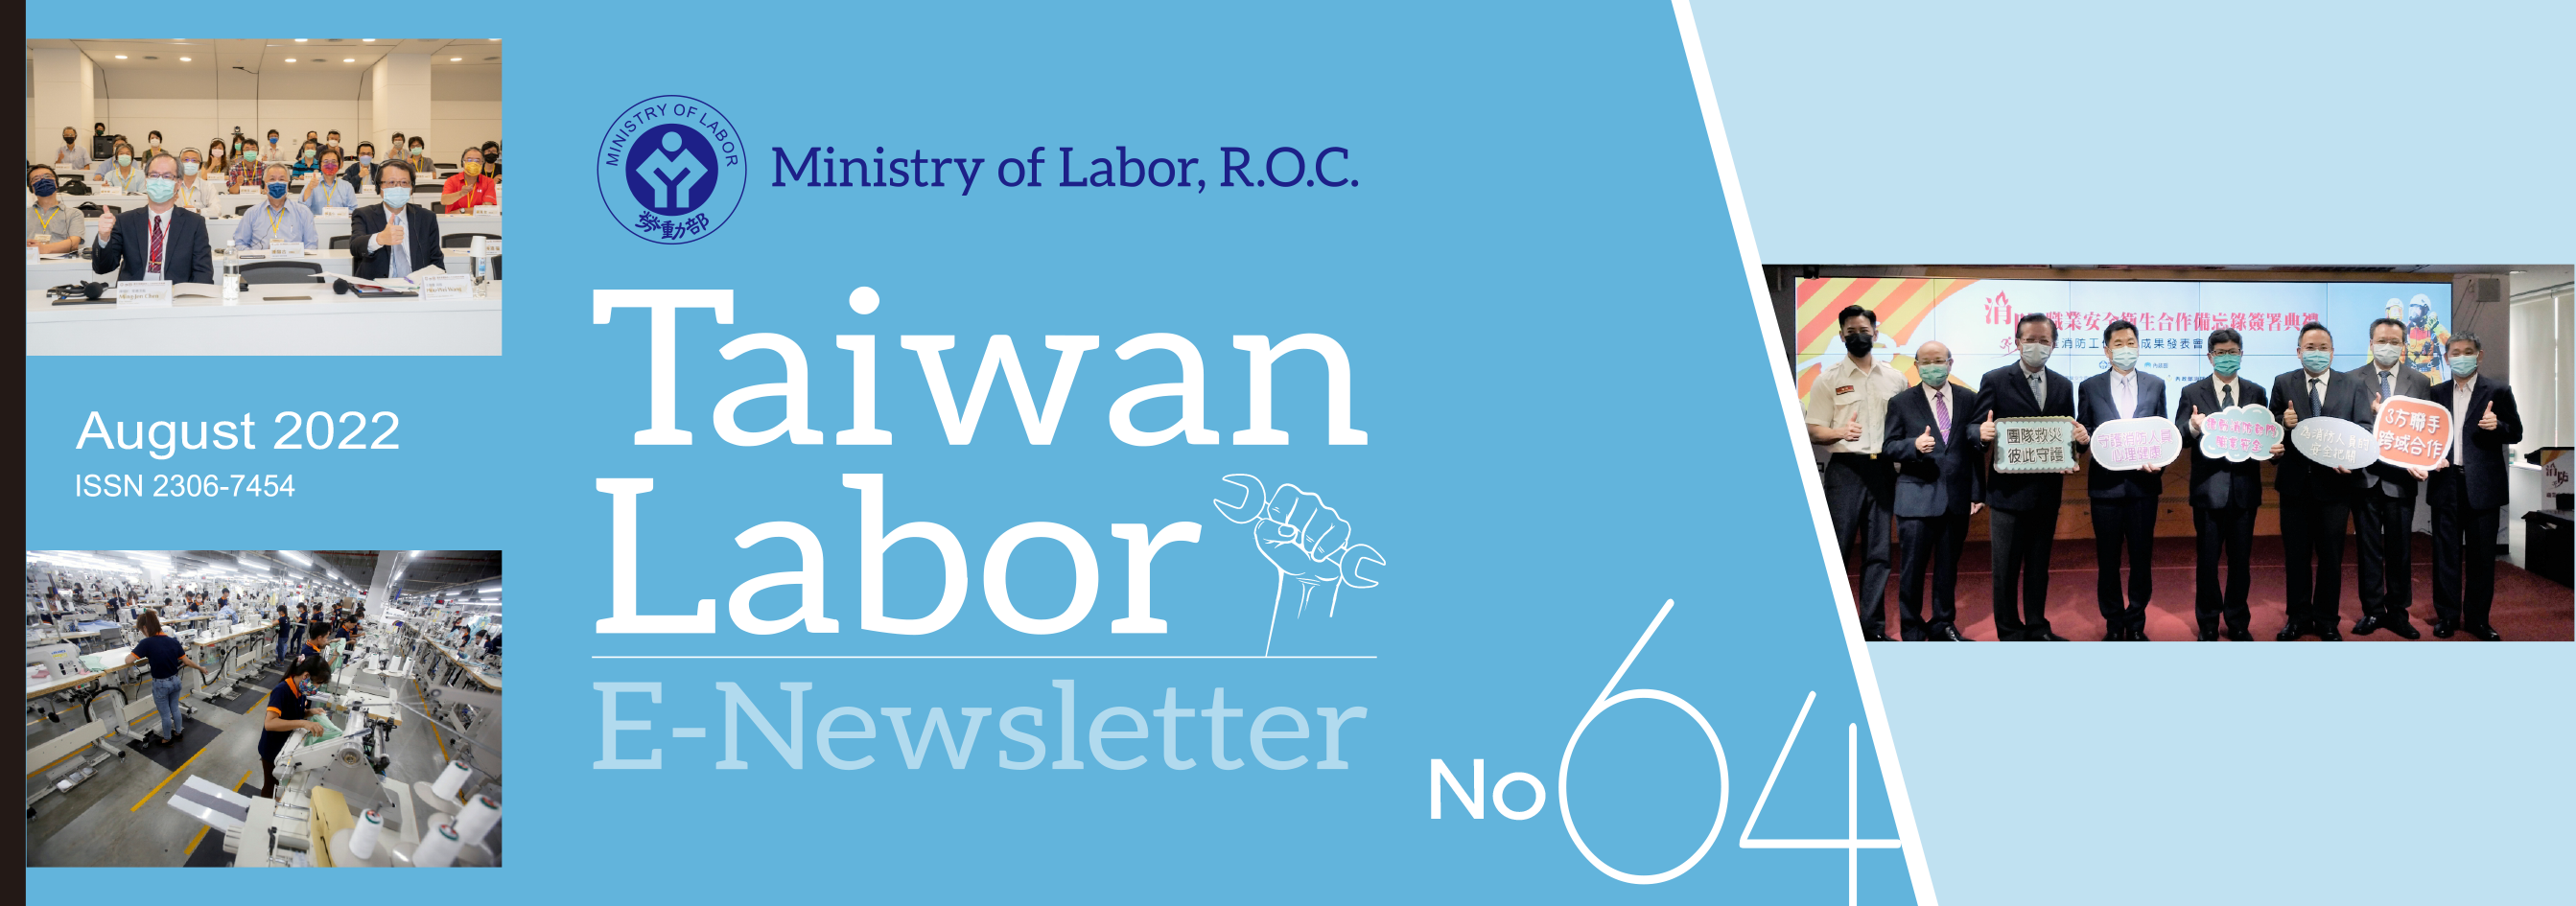 Taiwan Labor E-Newsletter No.64 Banner